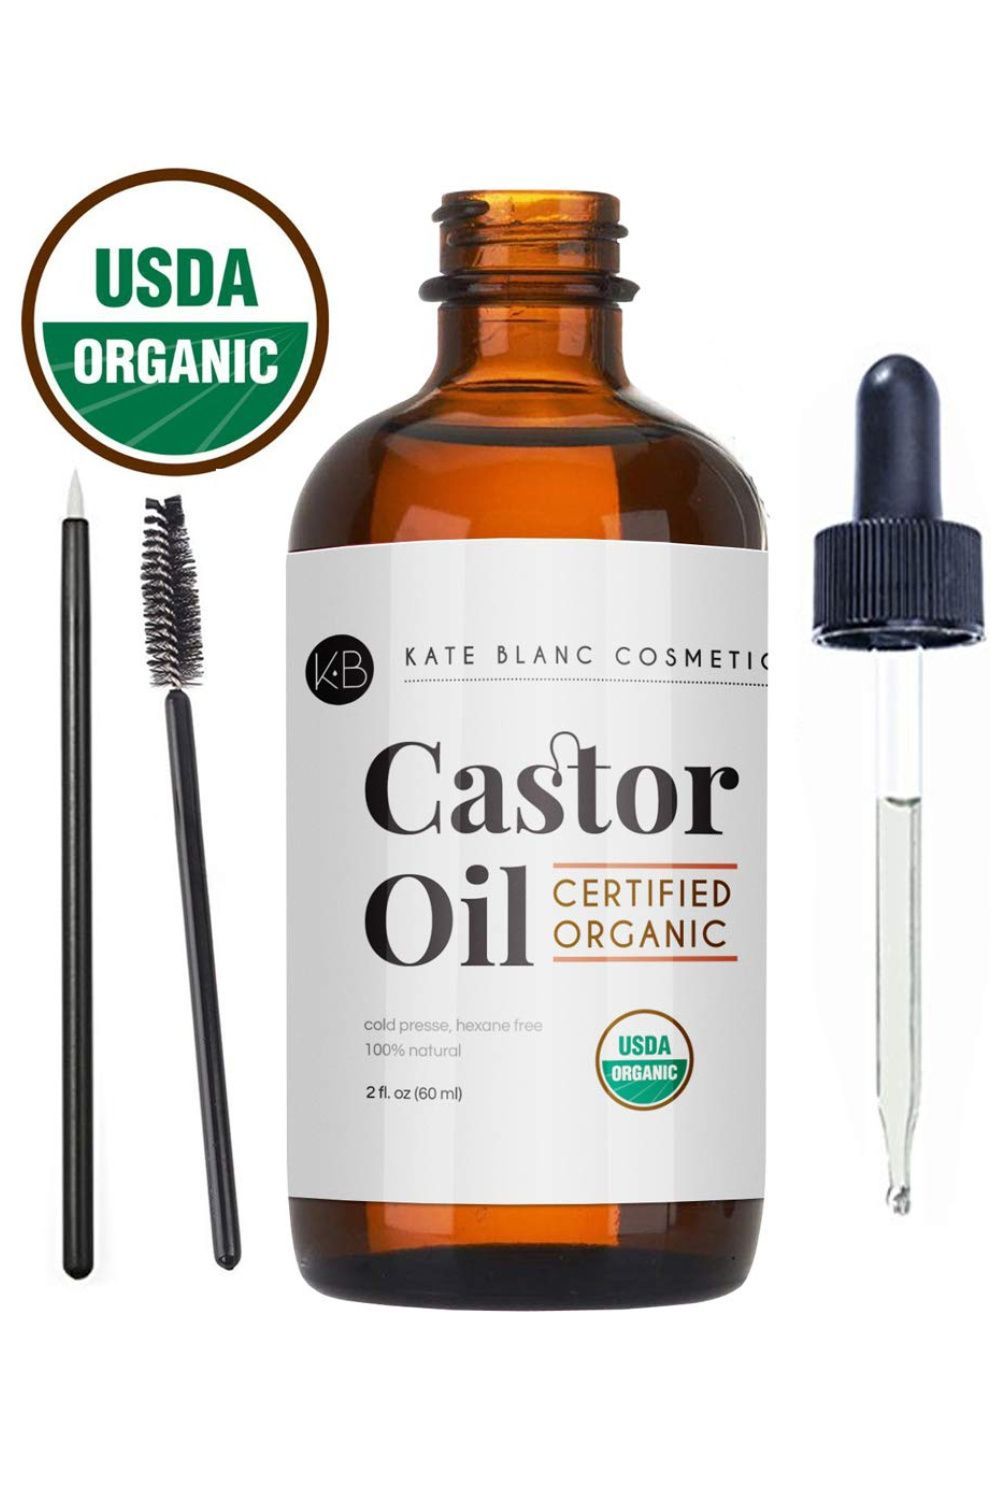 Does Castor Oil Make Eyelashes Grow Longer We Asked A Doctor For 21